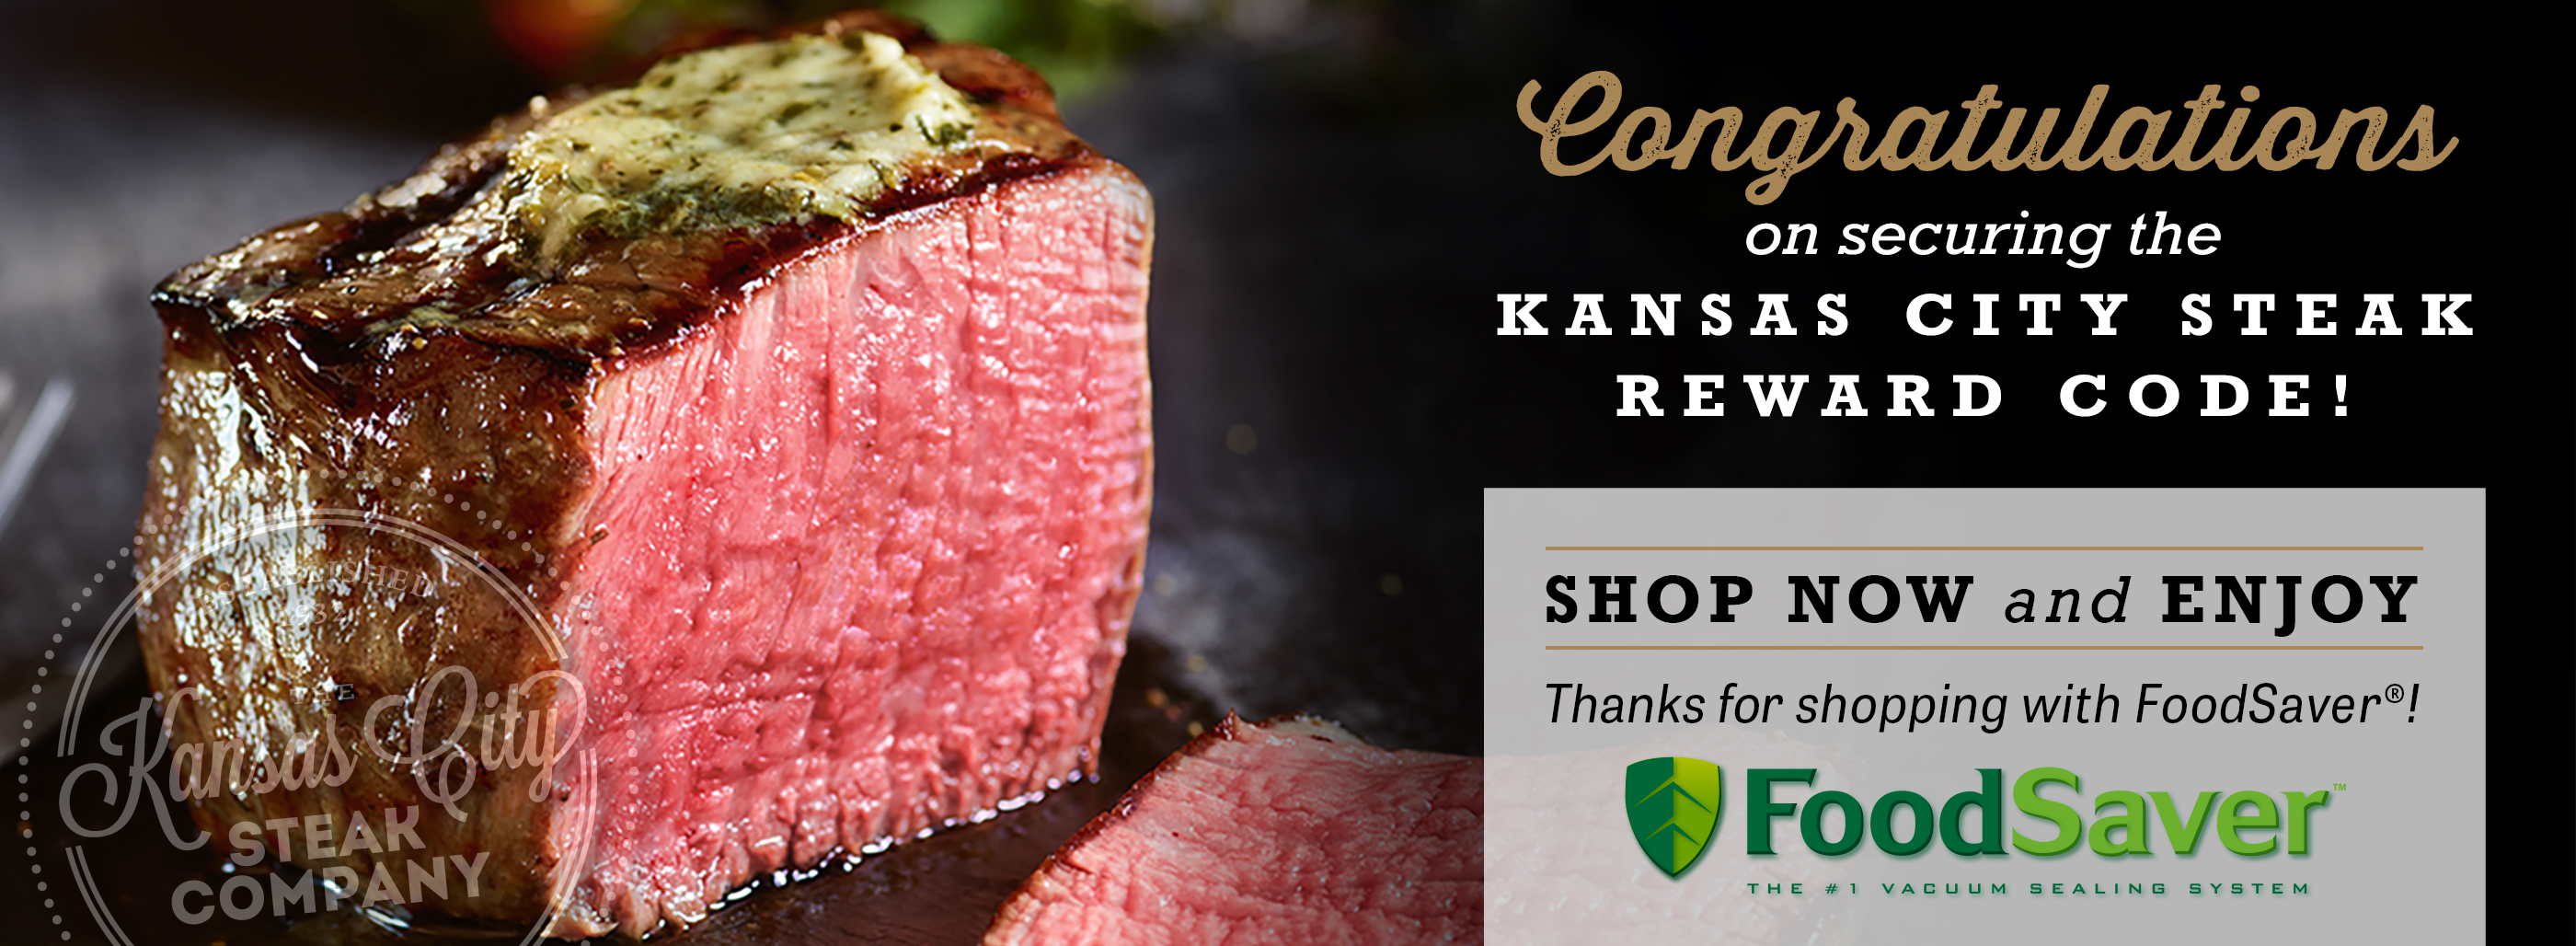 Congratulations on securing the Kansas City Steak Reward Code! Shop now and enjoy!